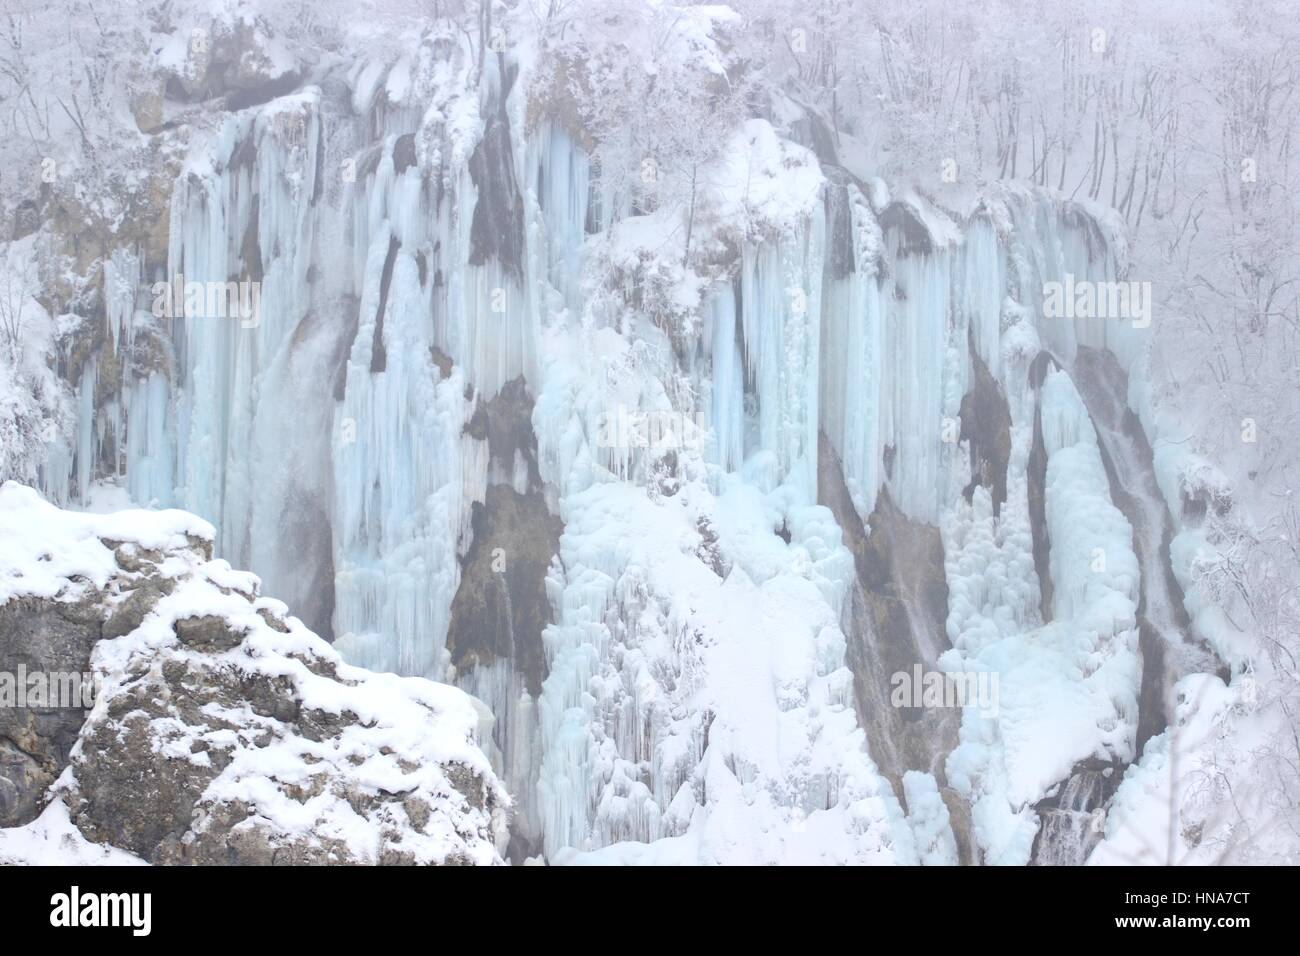 Plitvice lakes, World famous National park in Croatia, UNESCO world heritage, frozen waterfalls, cold winter scene Stock Photo